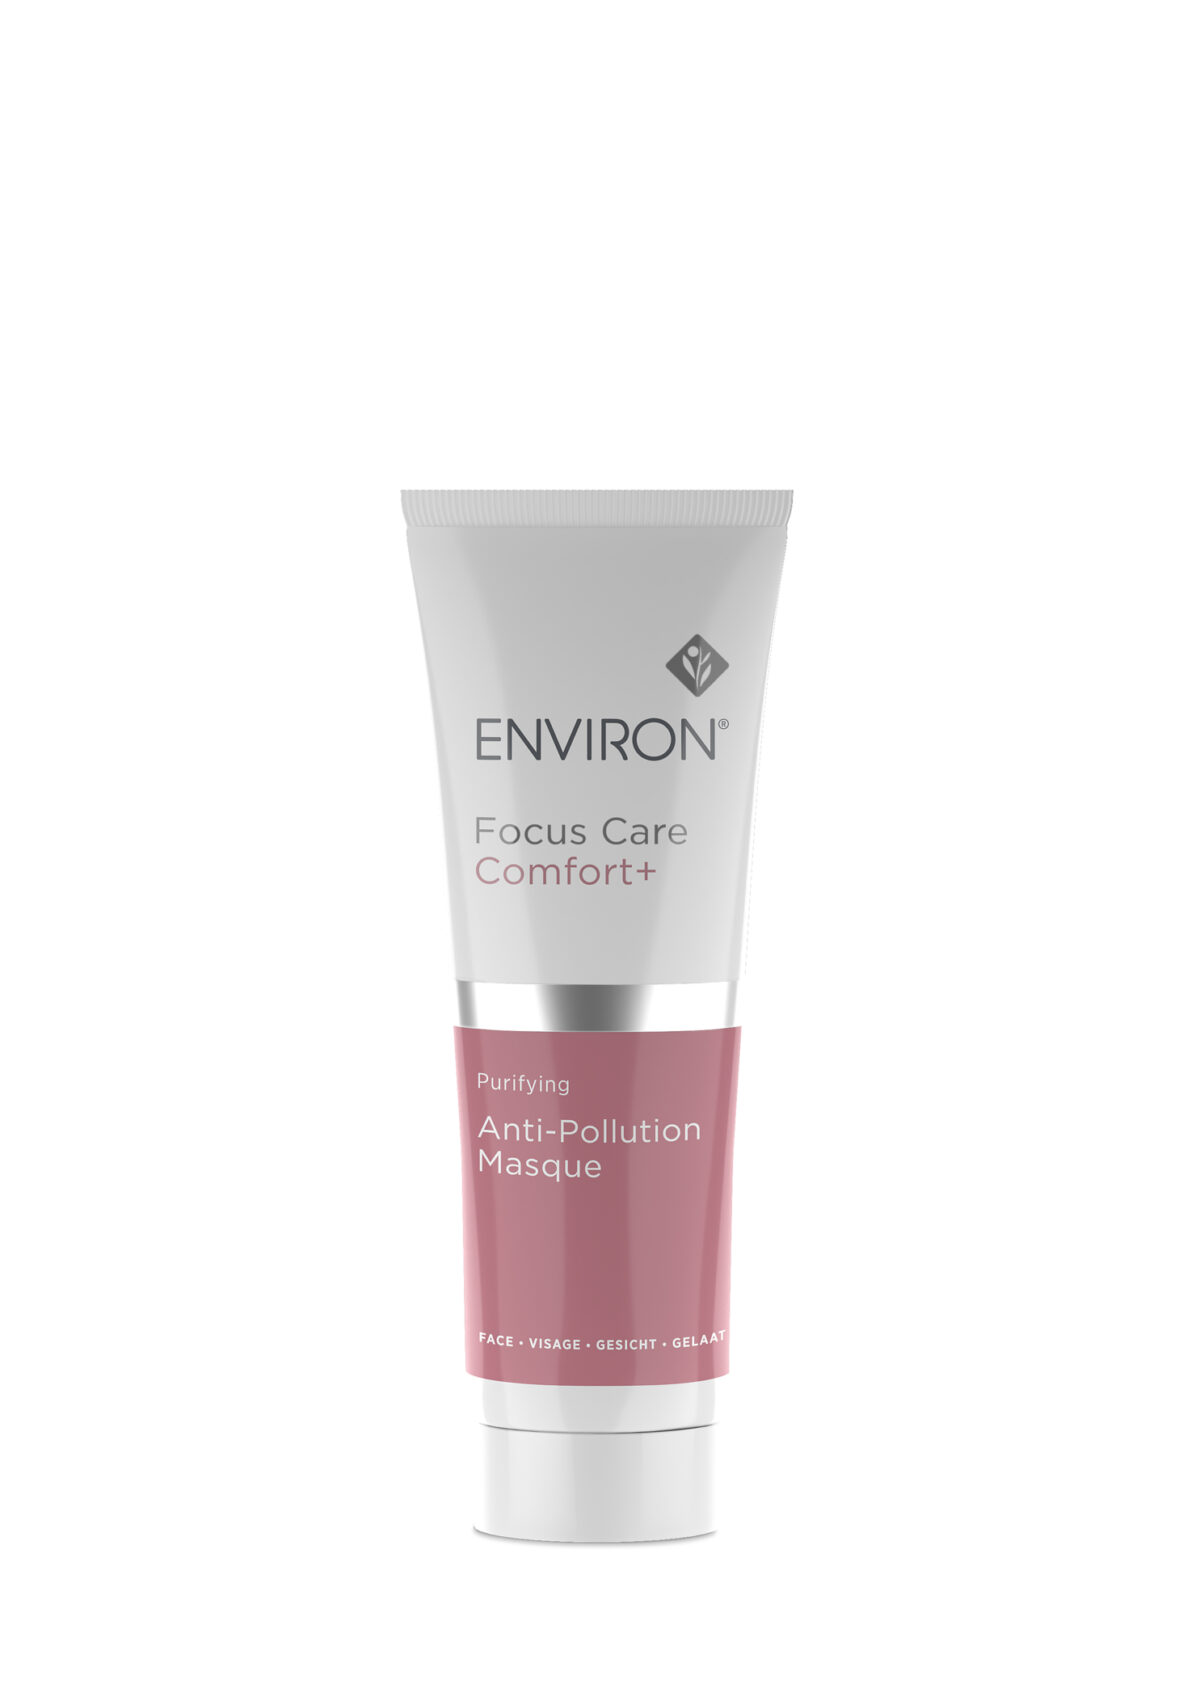 Environ Skin Care Products Anti-Polution Masque